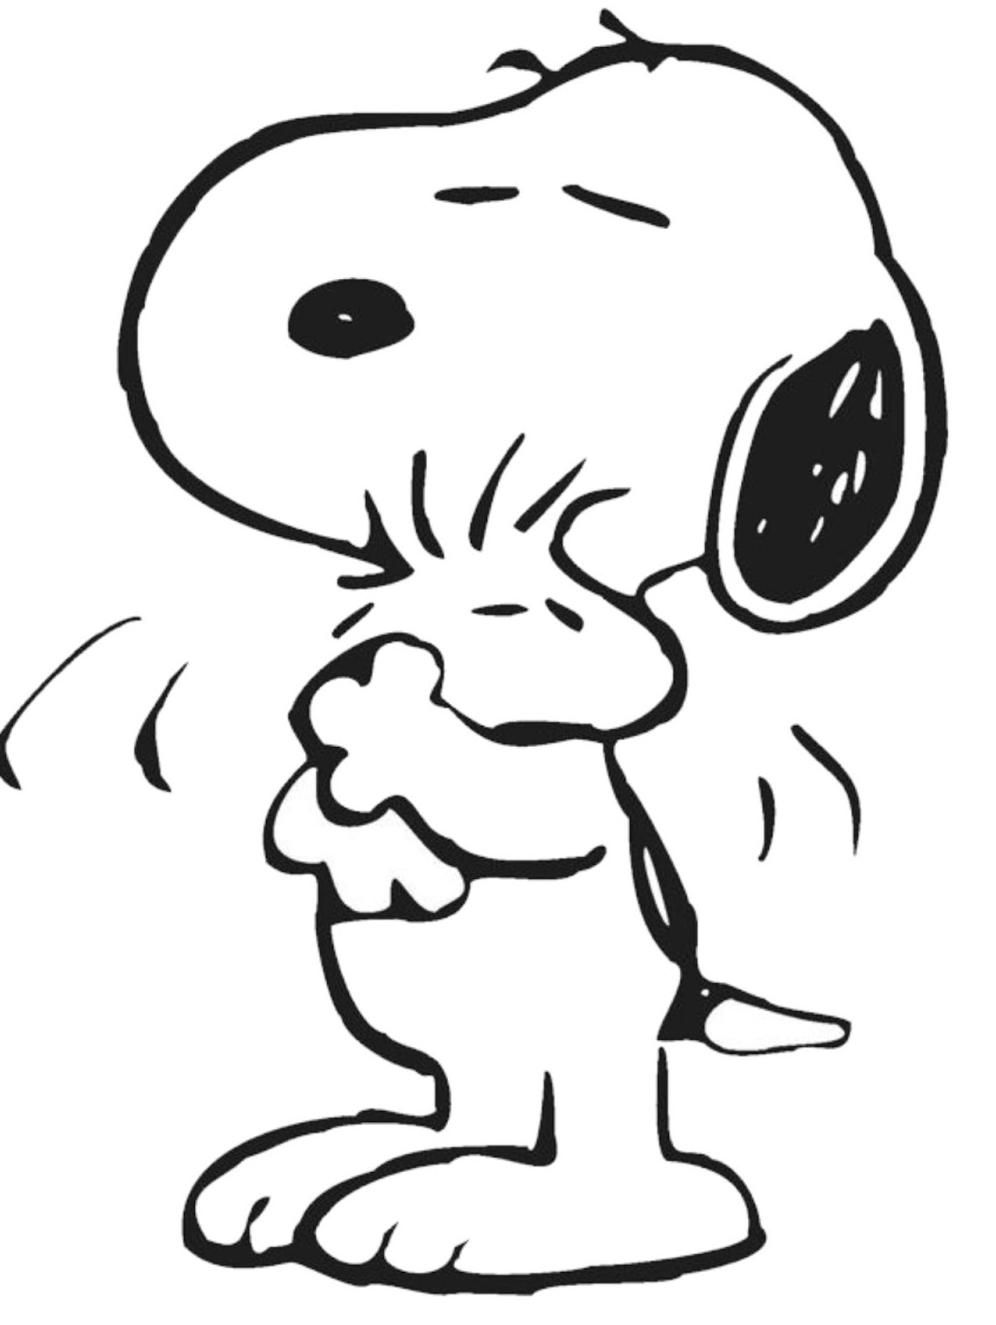 Image - Hugging love.jpg - Peanuts Wiki - Wikia